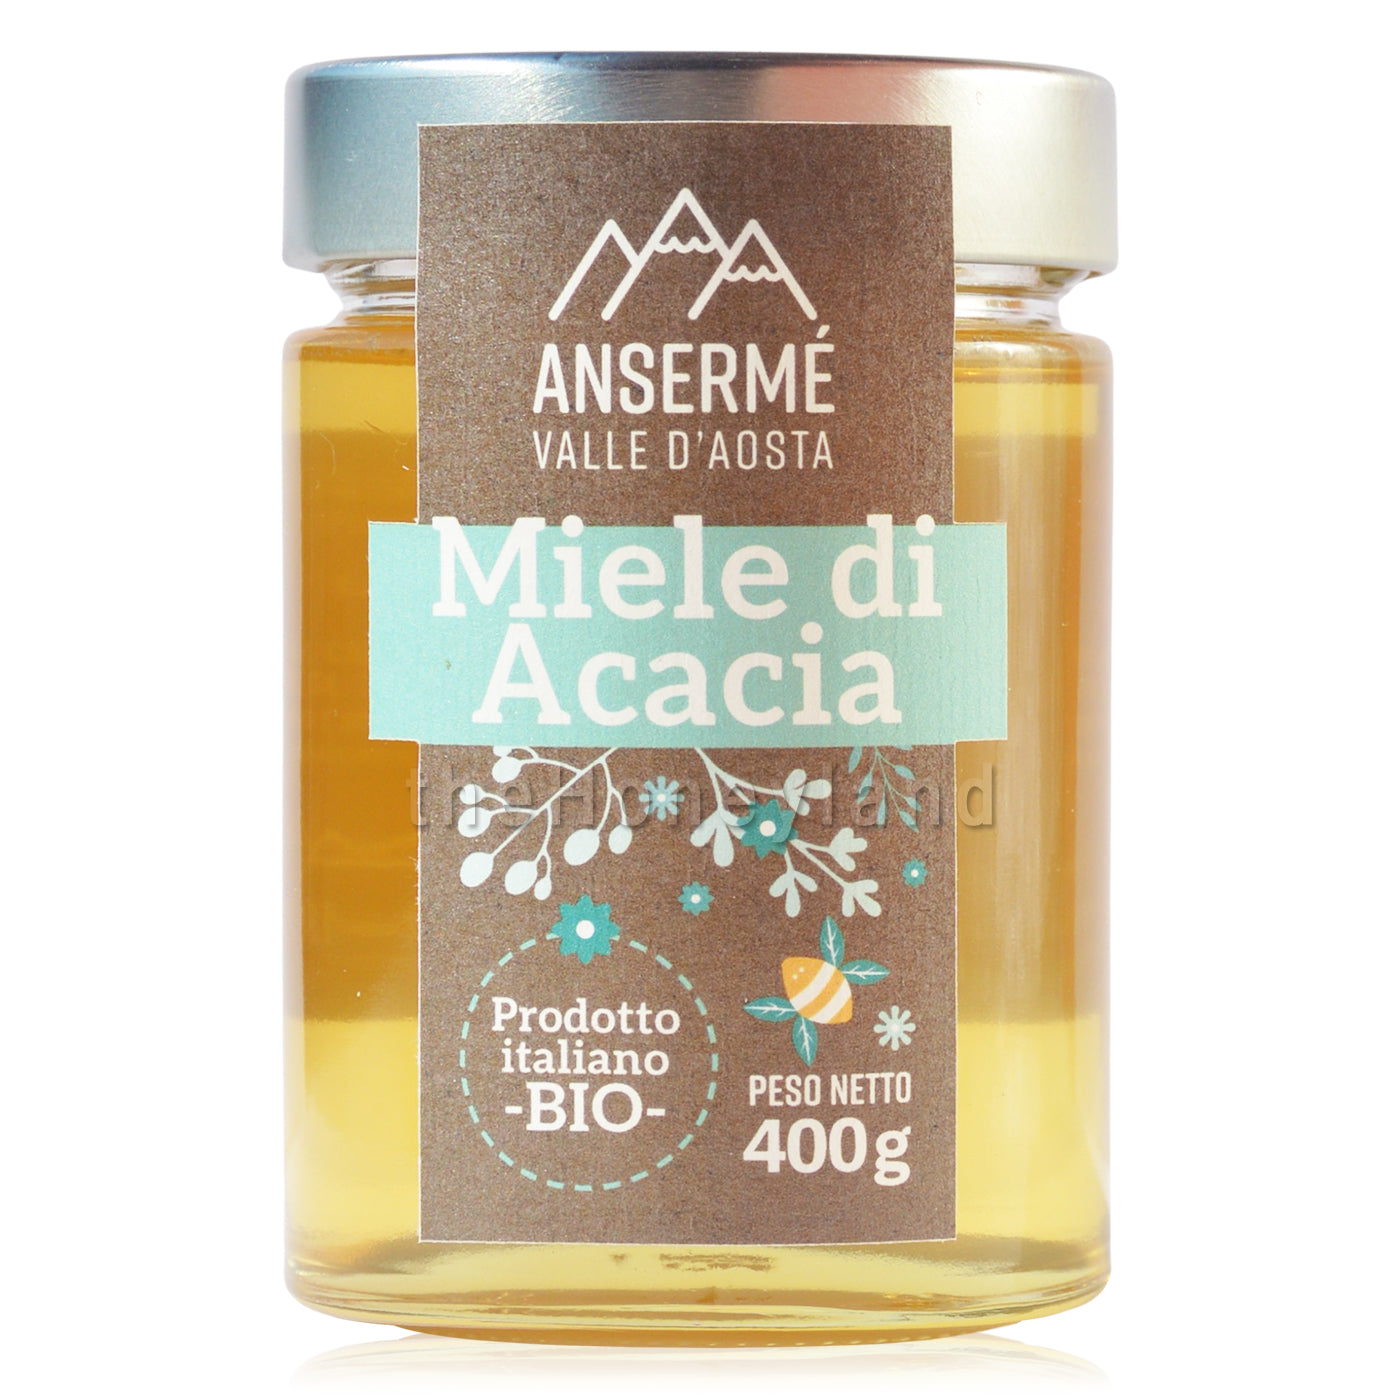 Miele Toscano di Acacia